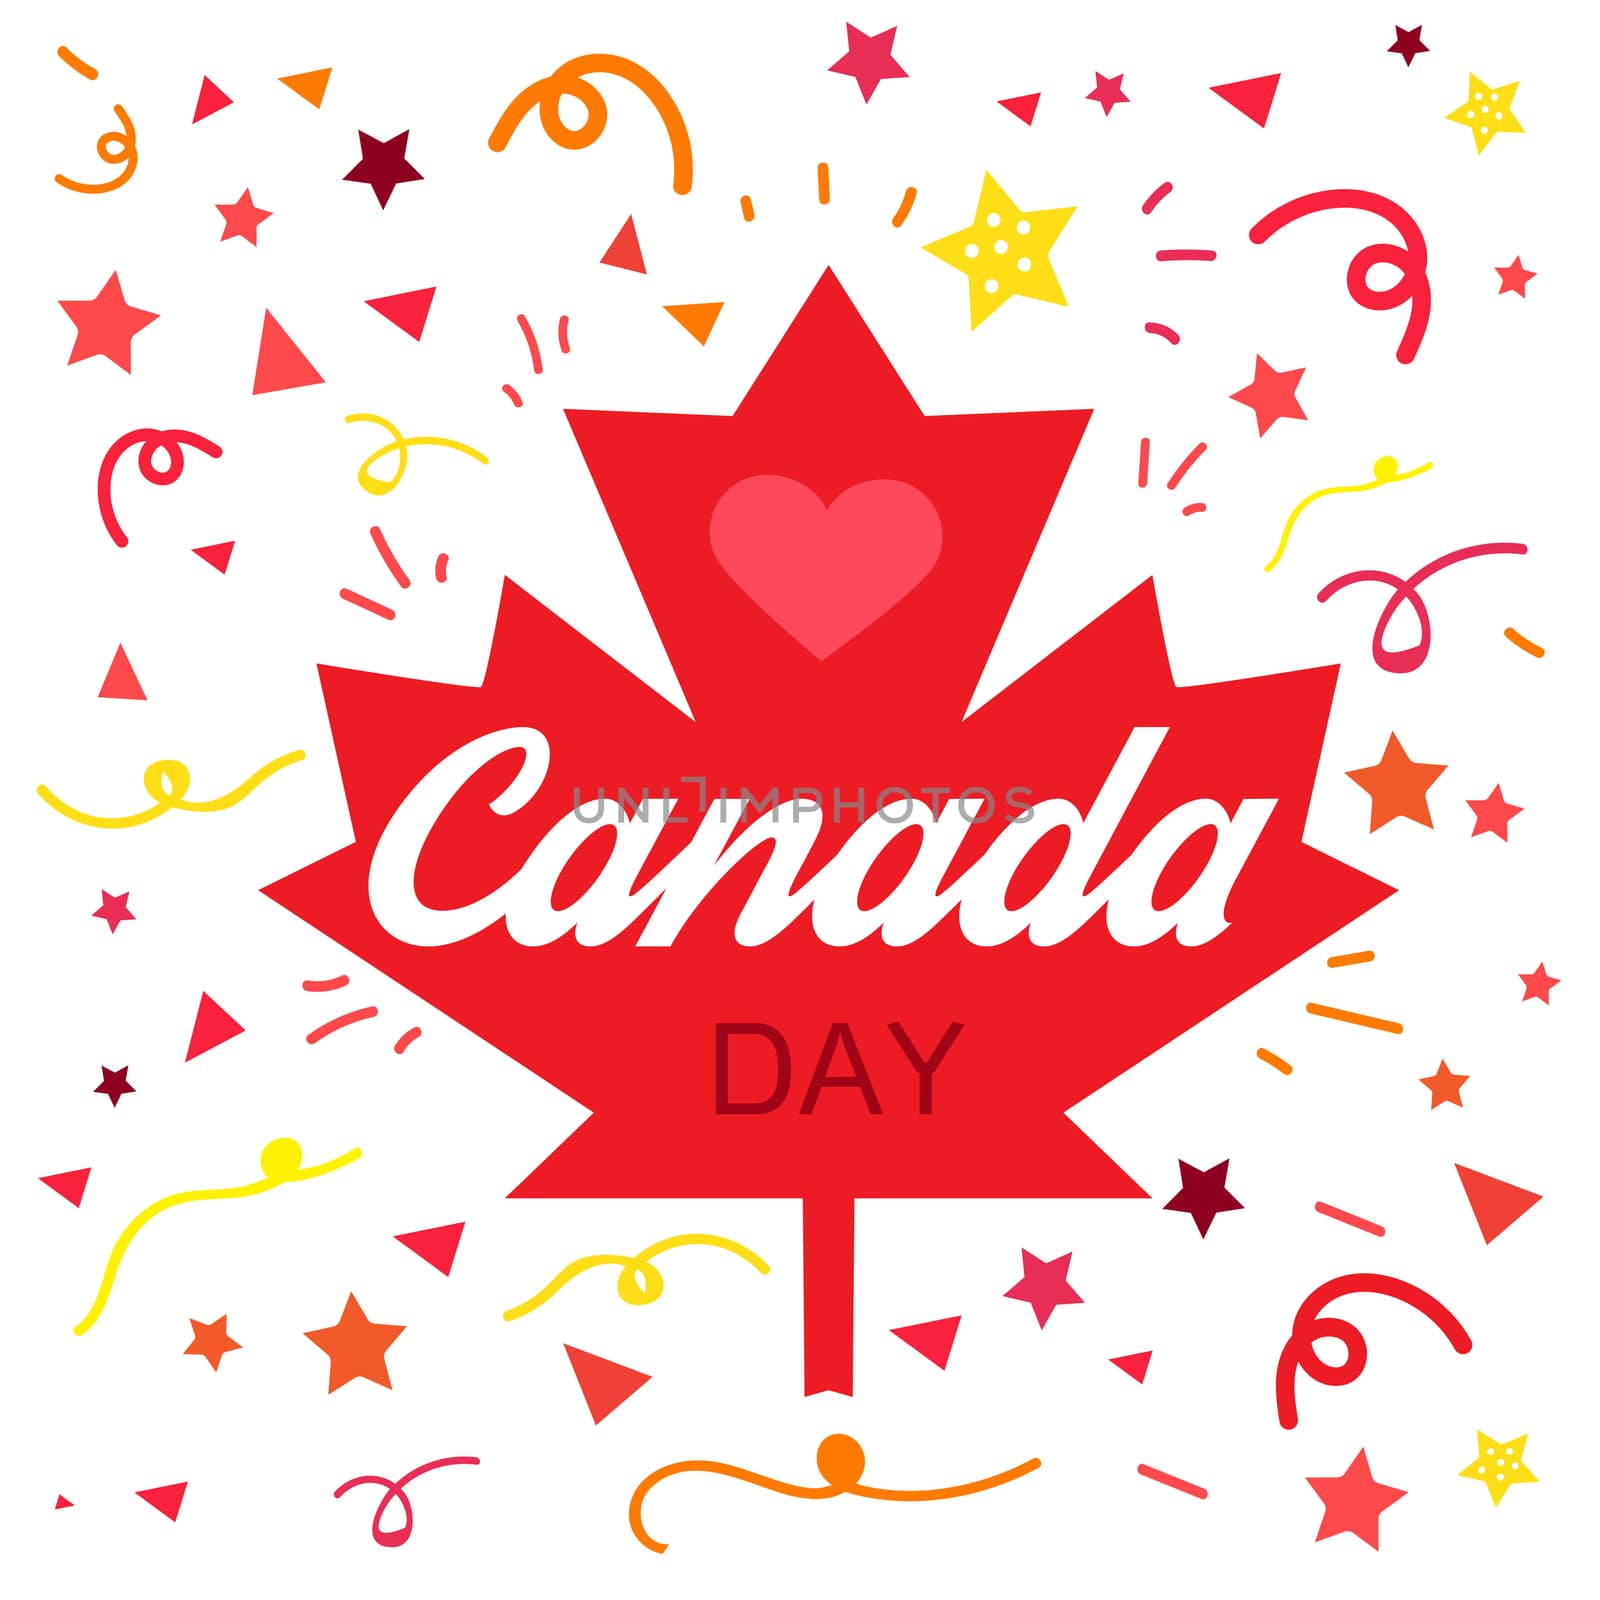 Happy Canada Day by barsrsind